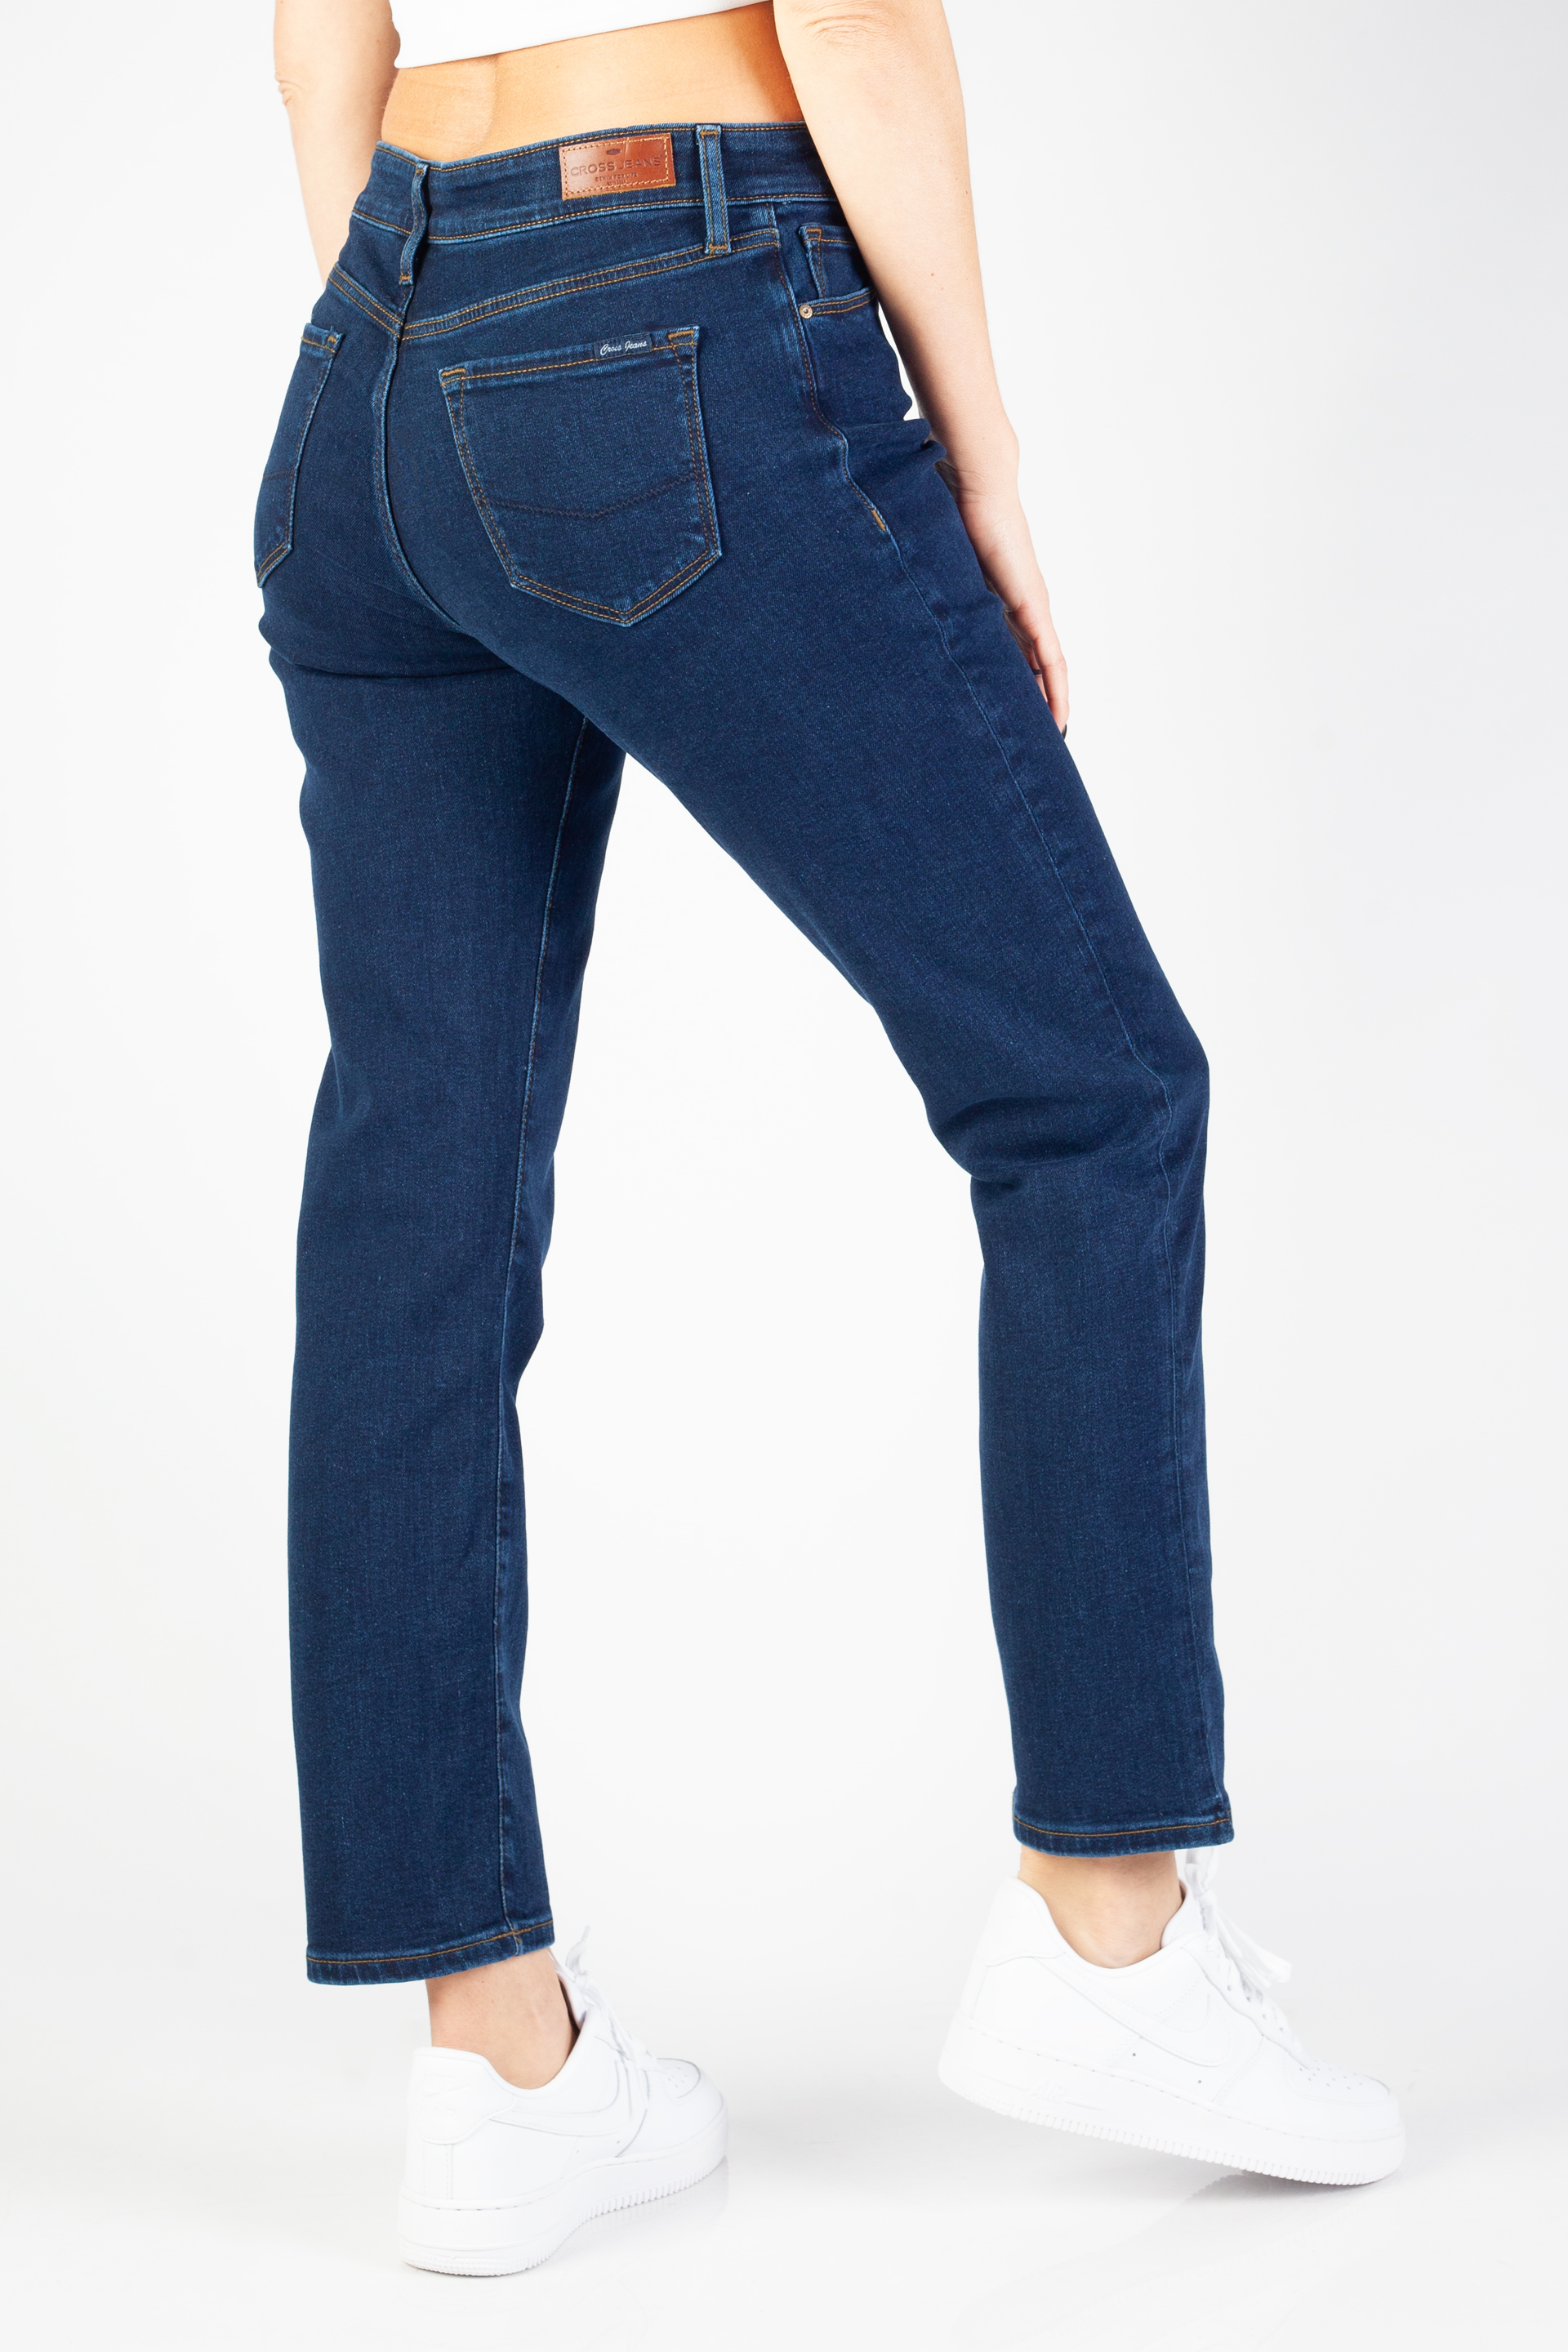 Jeans CROSS JEANS P489-190